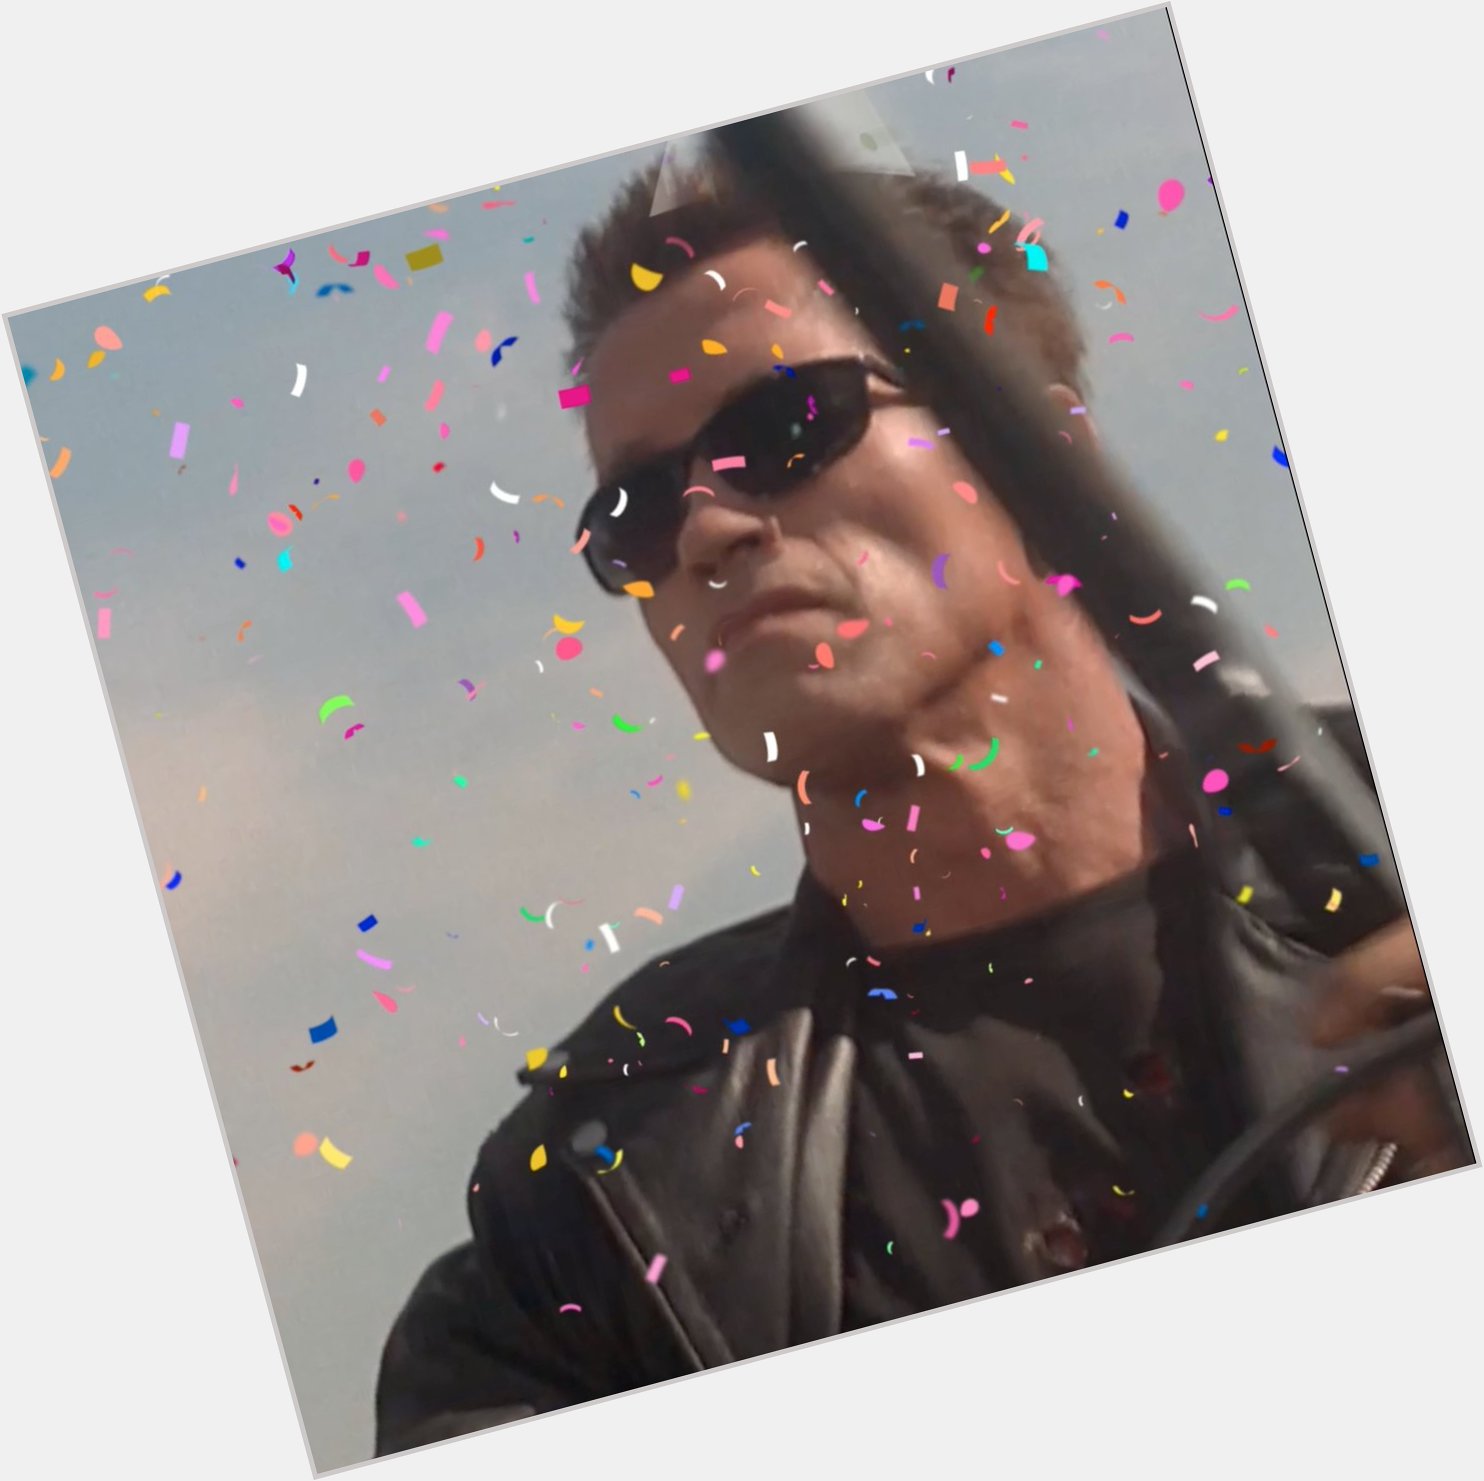 Happy birthday to THE Terminator, Arnold Schwarzenegger! 